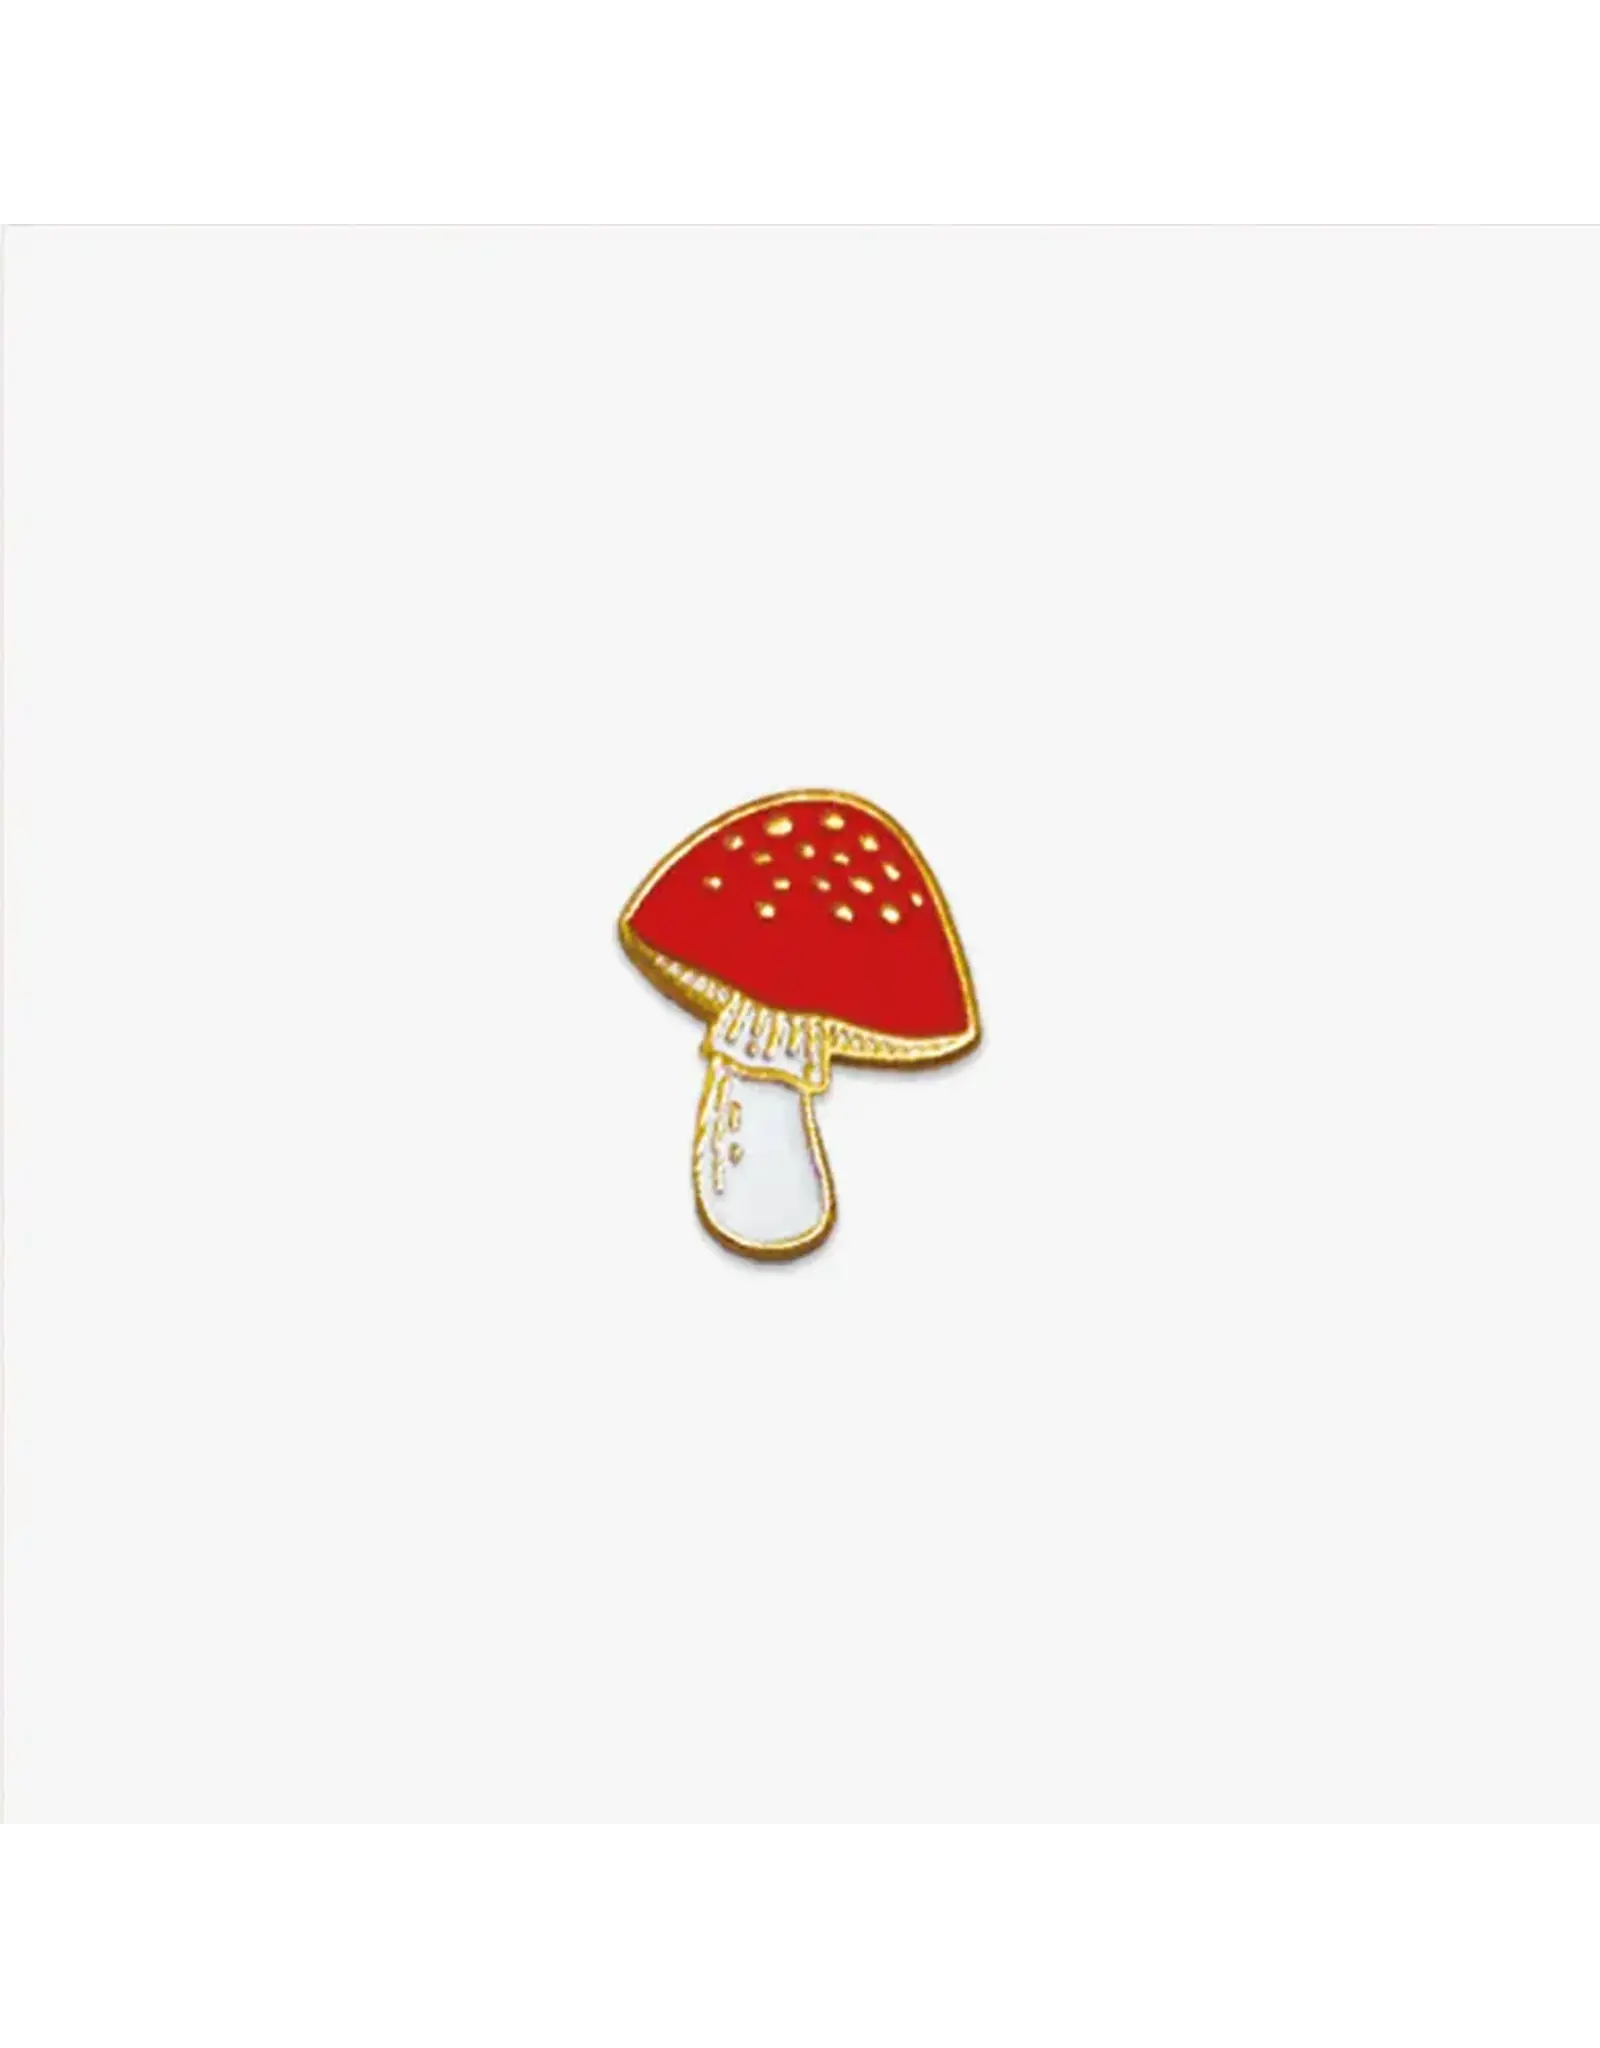 All The Ways to Say Pin -  Mushroom